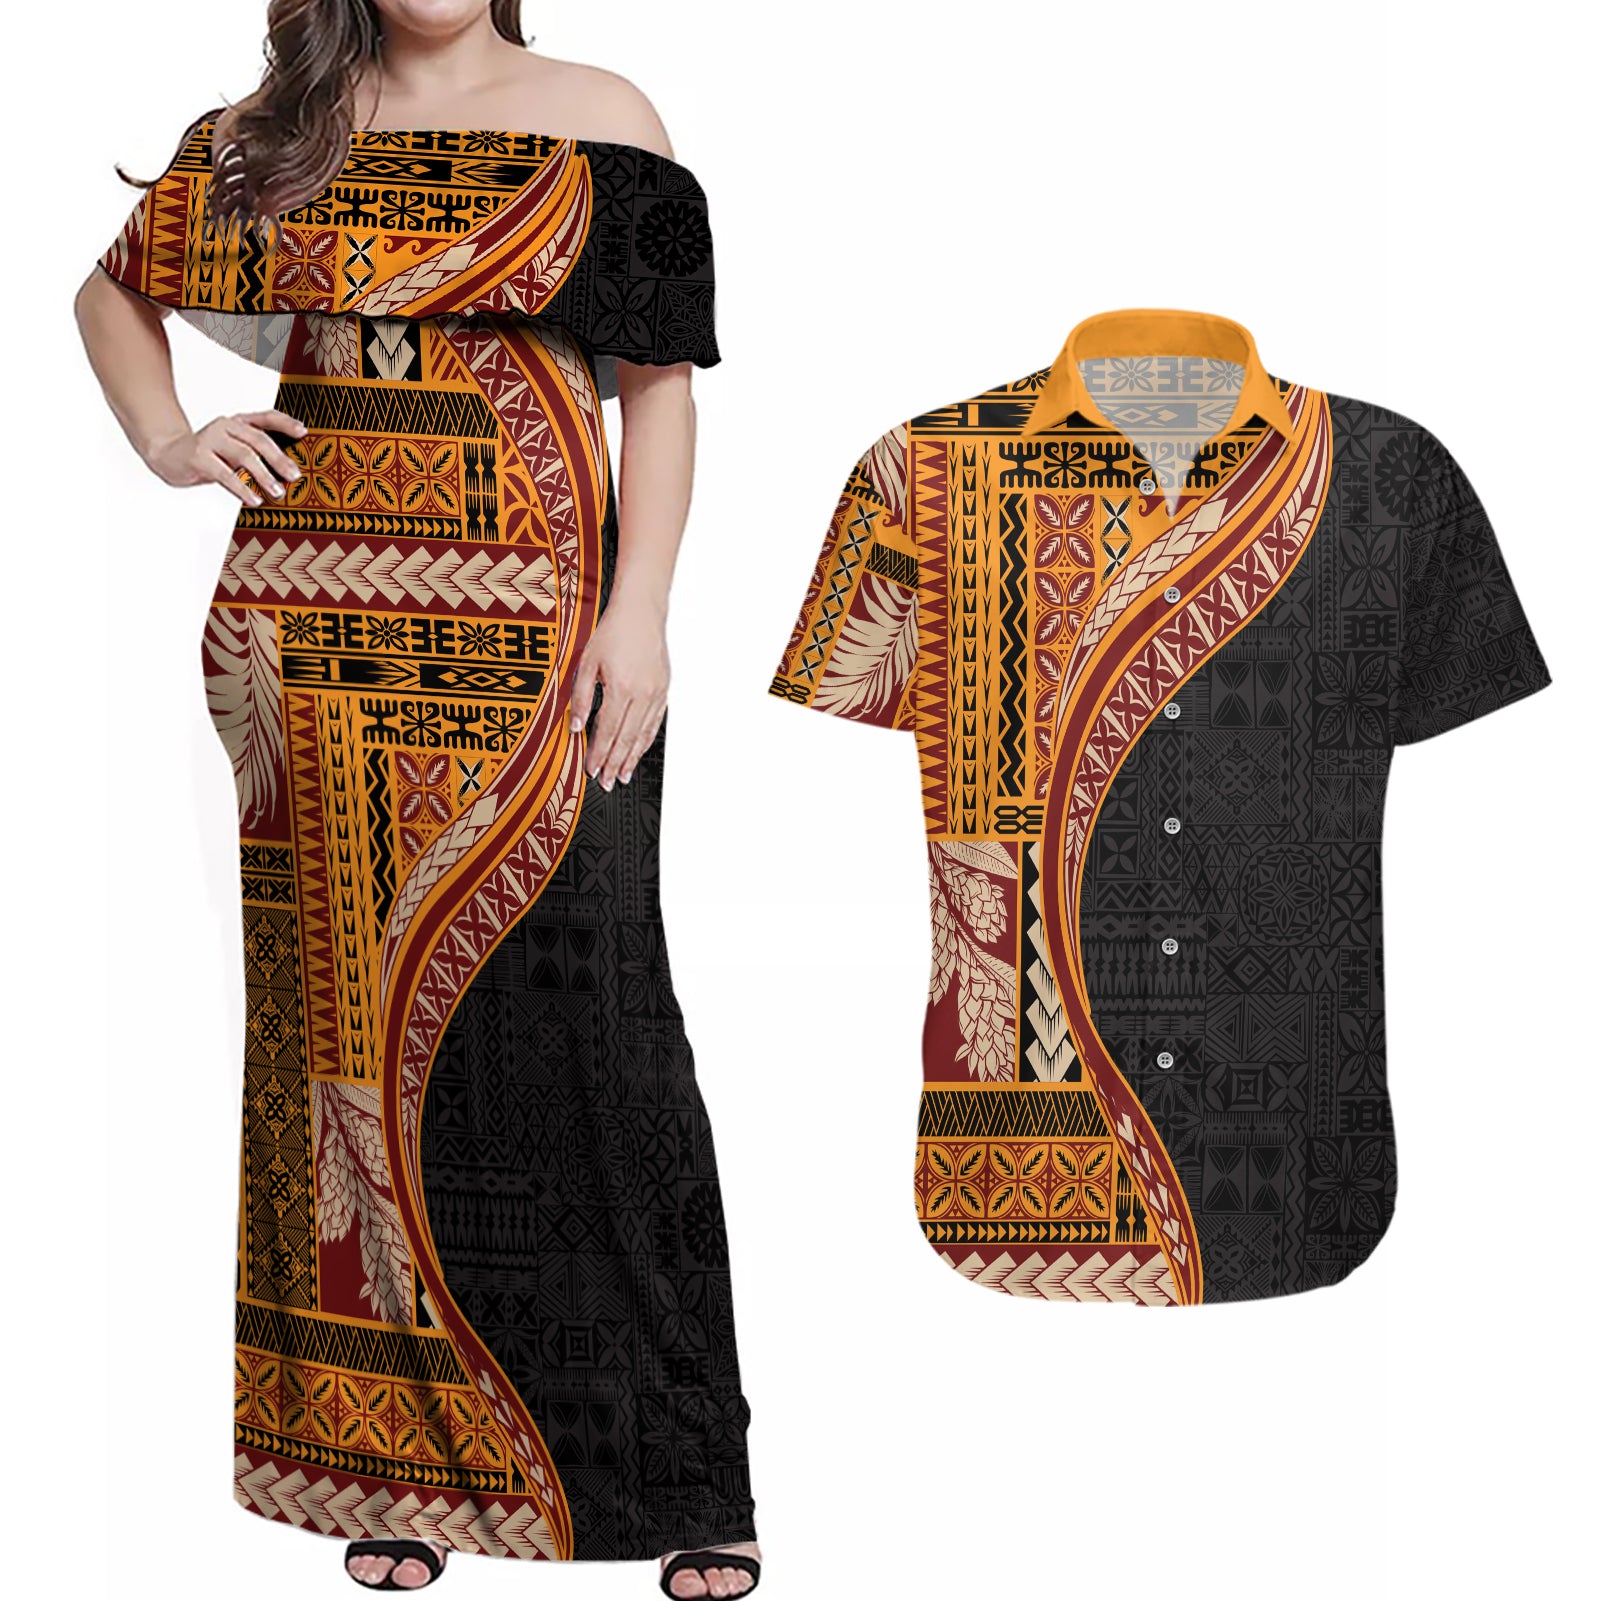 Samoa Siapo Motif and Tapa Pattern Half Style Couples Matching Off Shoulder Maxi Dress and Hawaiian Shirt Yellow Color